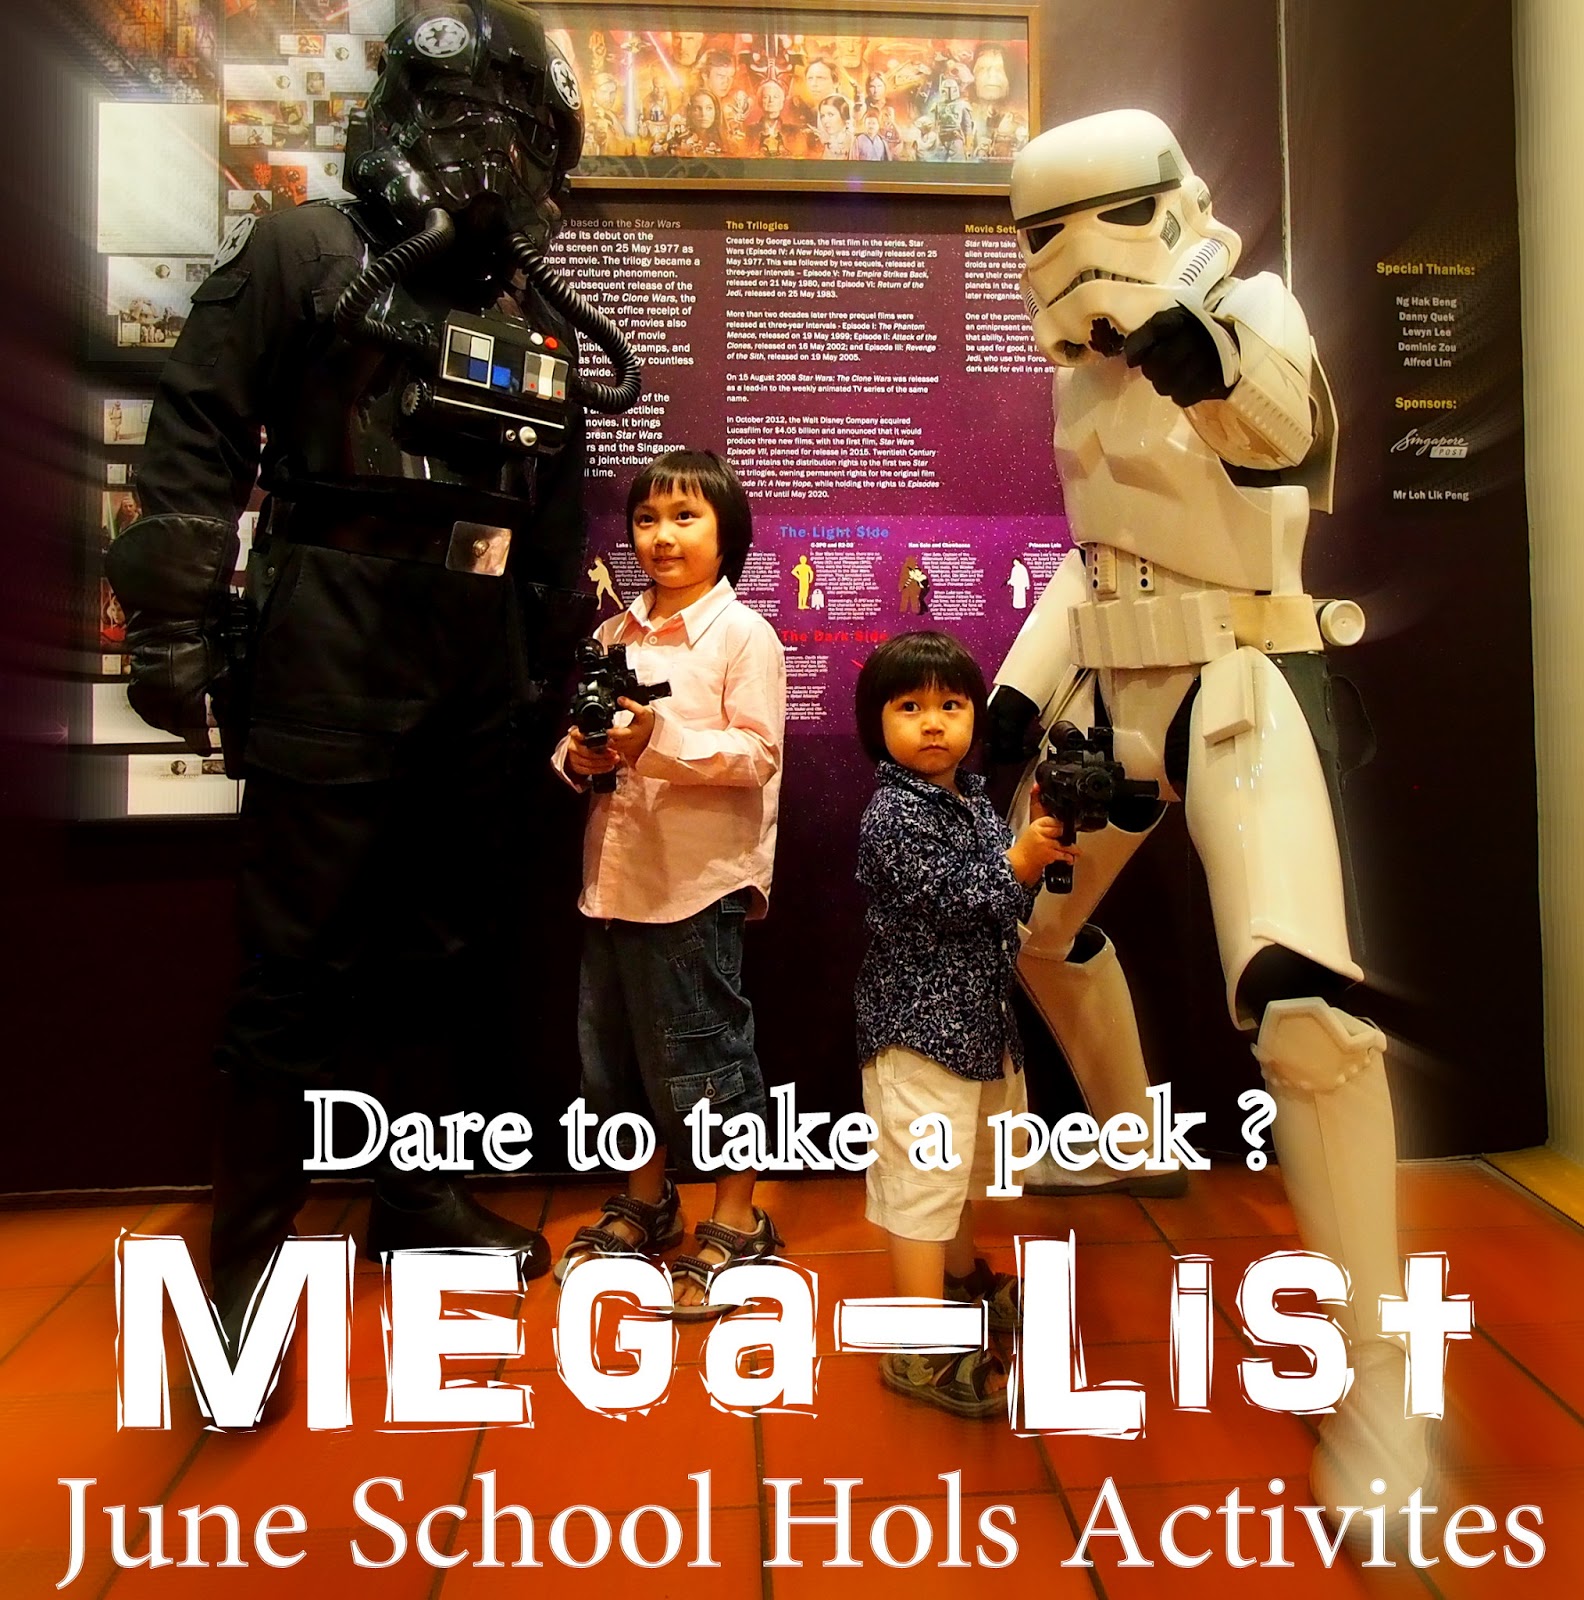 June School Holidays activities for kids Singapore 2013